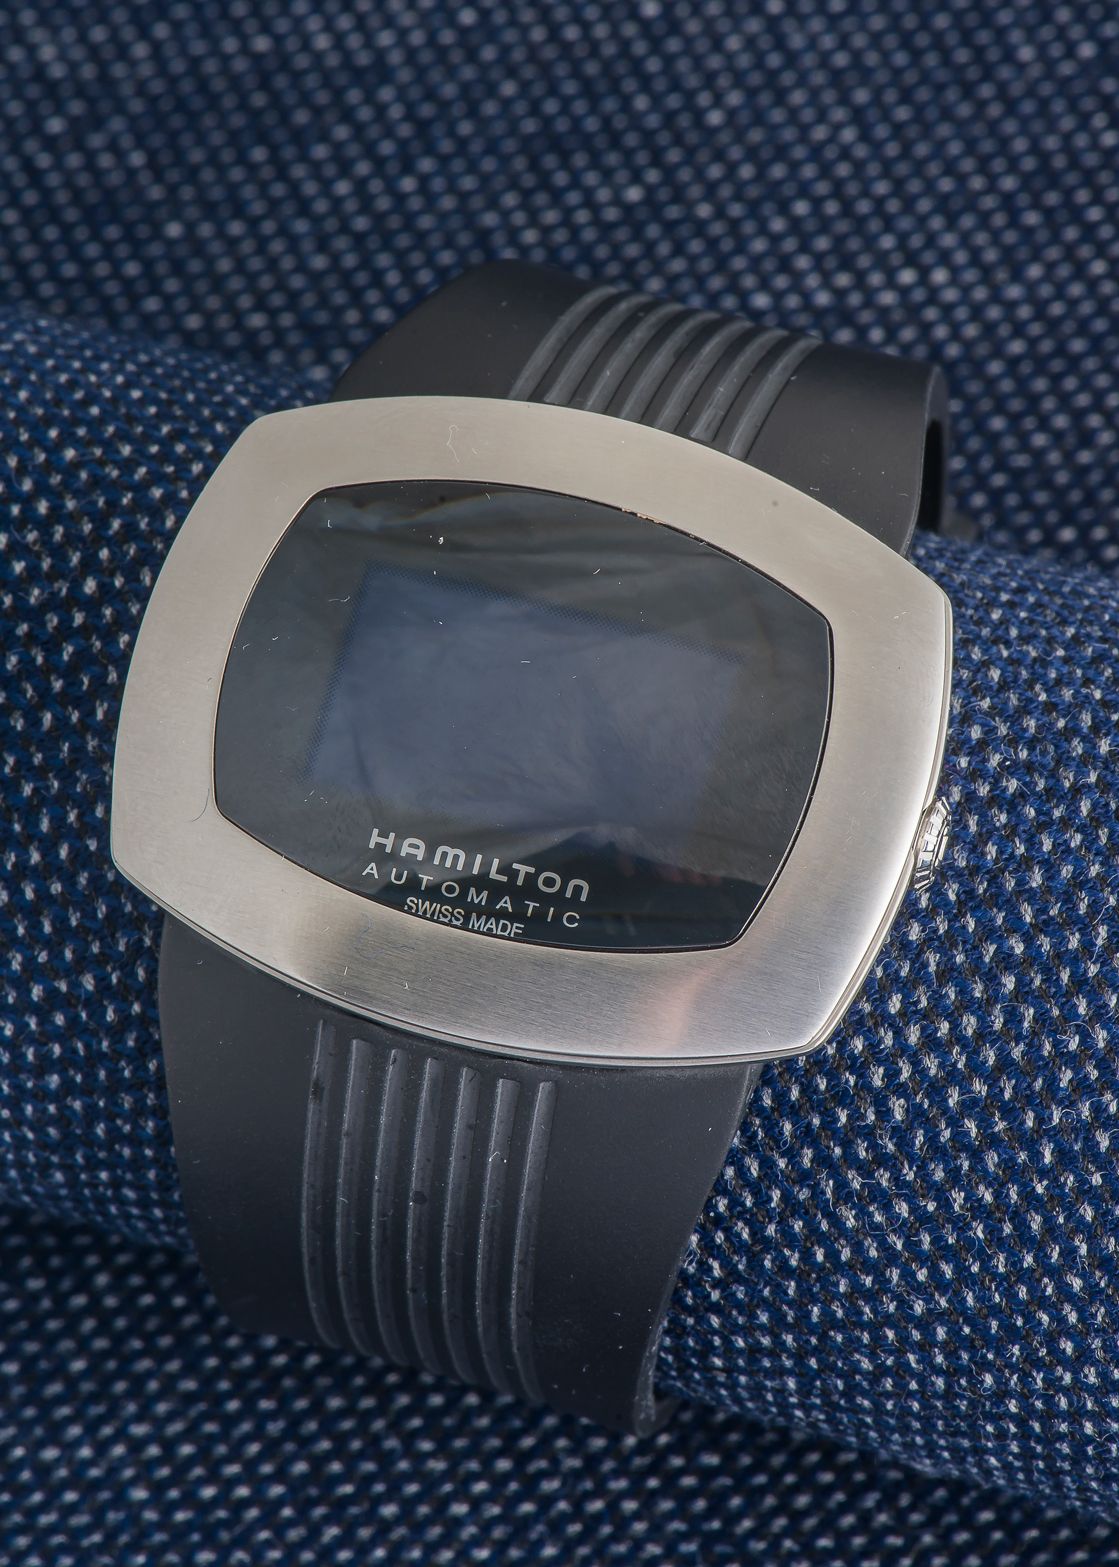 HAMILTON 精钢Pulsomatic腕表Ref.H525150，弧形长方形阶梯式表壳，表盘上有模拟显示。螺钉固定的玻璃背面。橡胶表带配钢针扣，已签名。

&hellip;